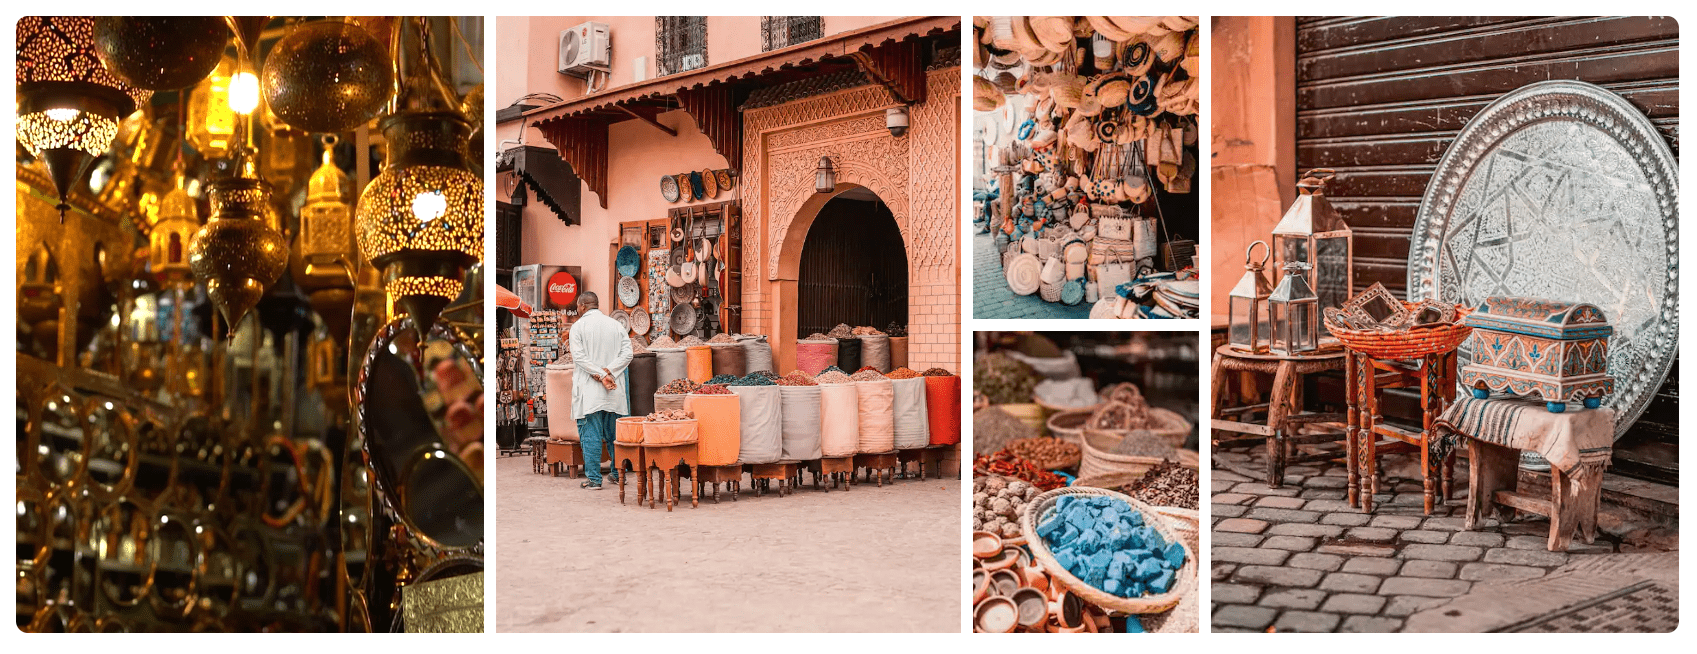 Palace Bahia Marrakech Tour Guide